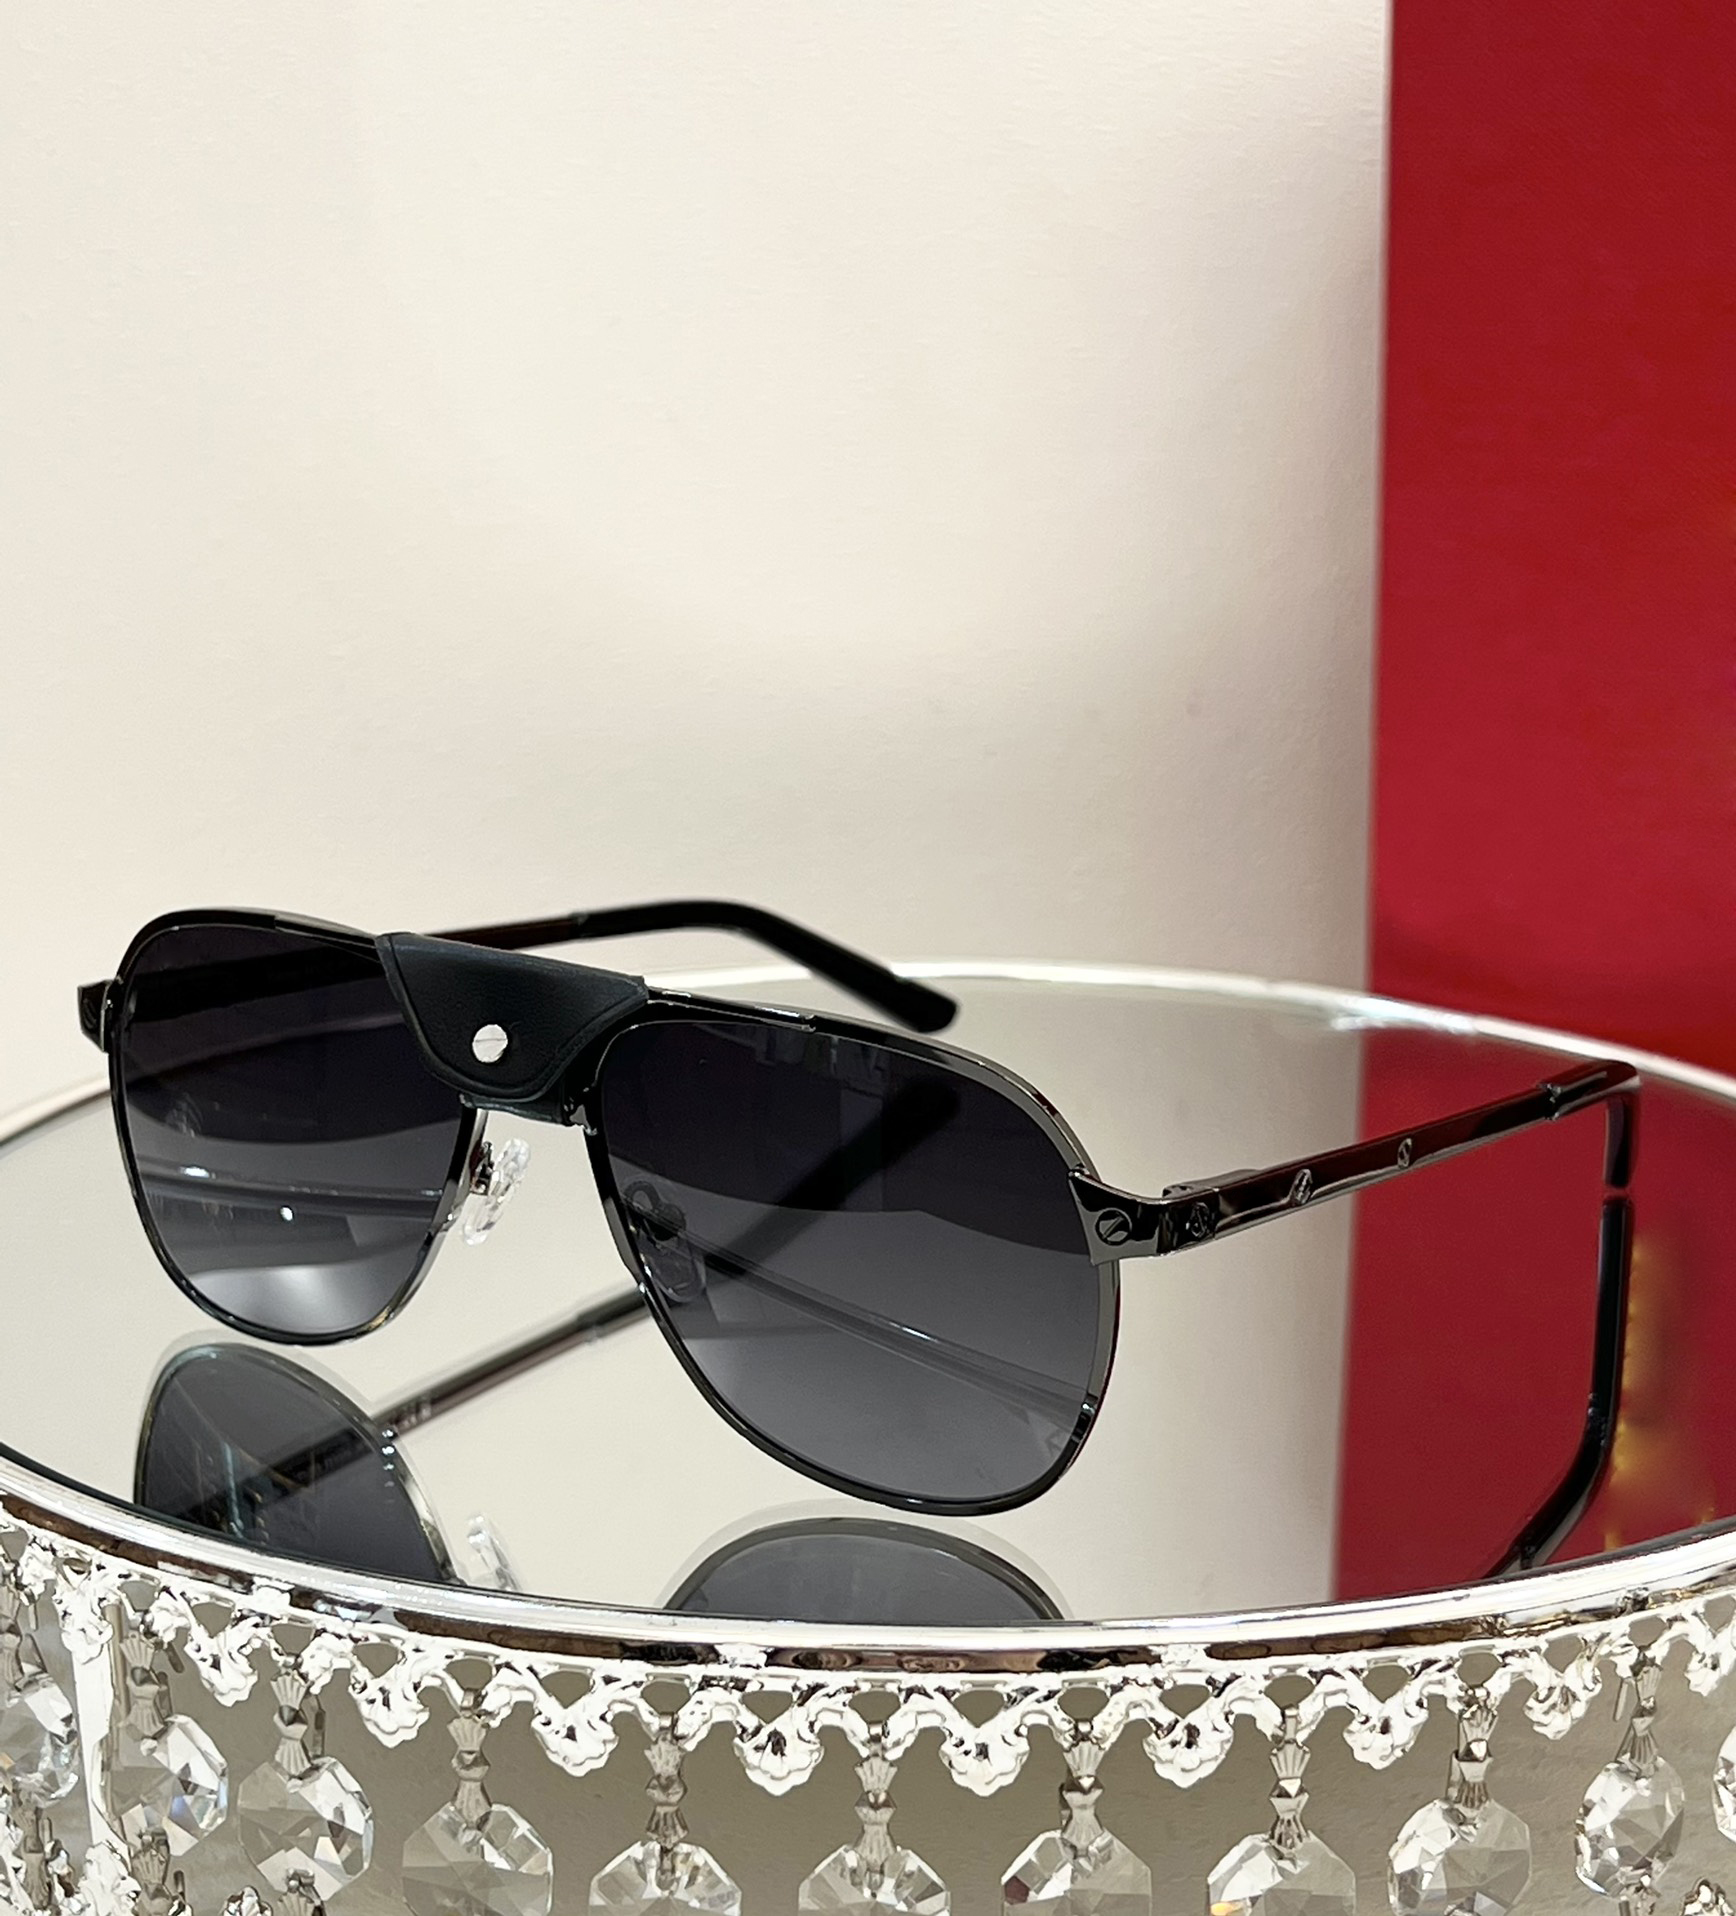 luxury carter lunettes designer sunglasses men women 0165 square metal popular frame uv400 retro eyewear fashion trendy sun glasses original quality come with case